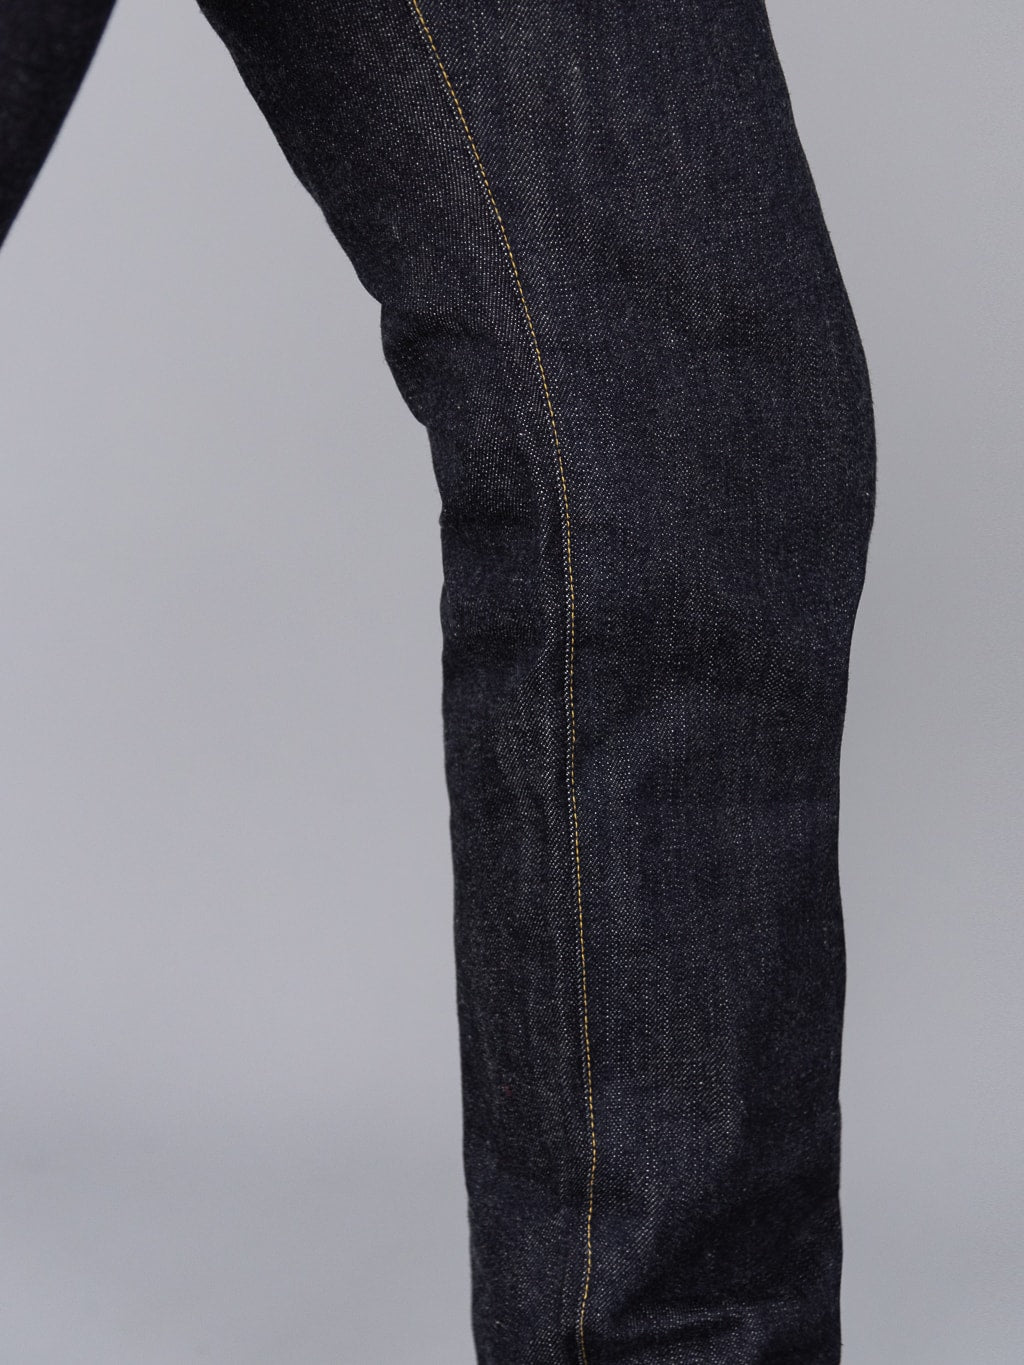 The Flat Head 3002 14.5oz Slim Tapered selvedge Jeans inseam